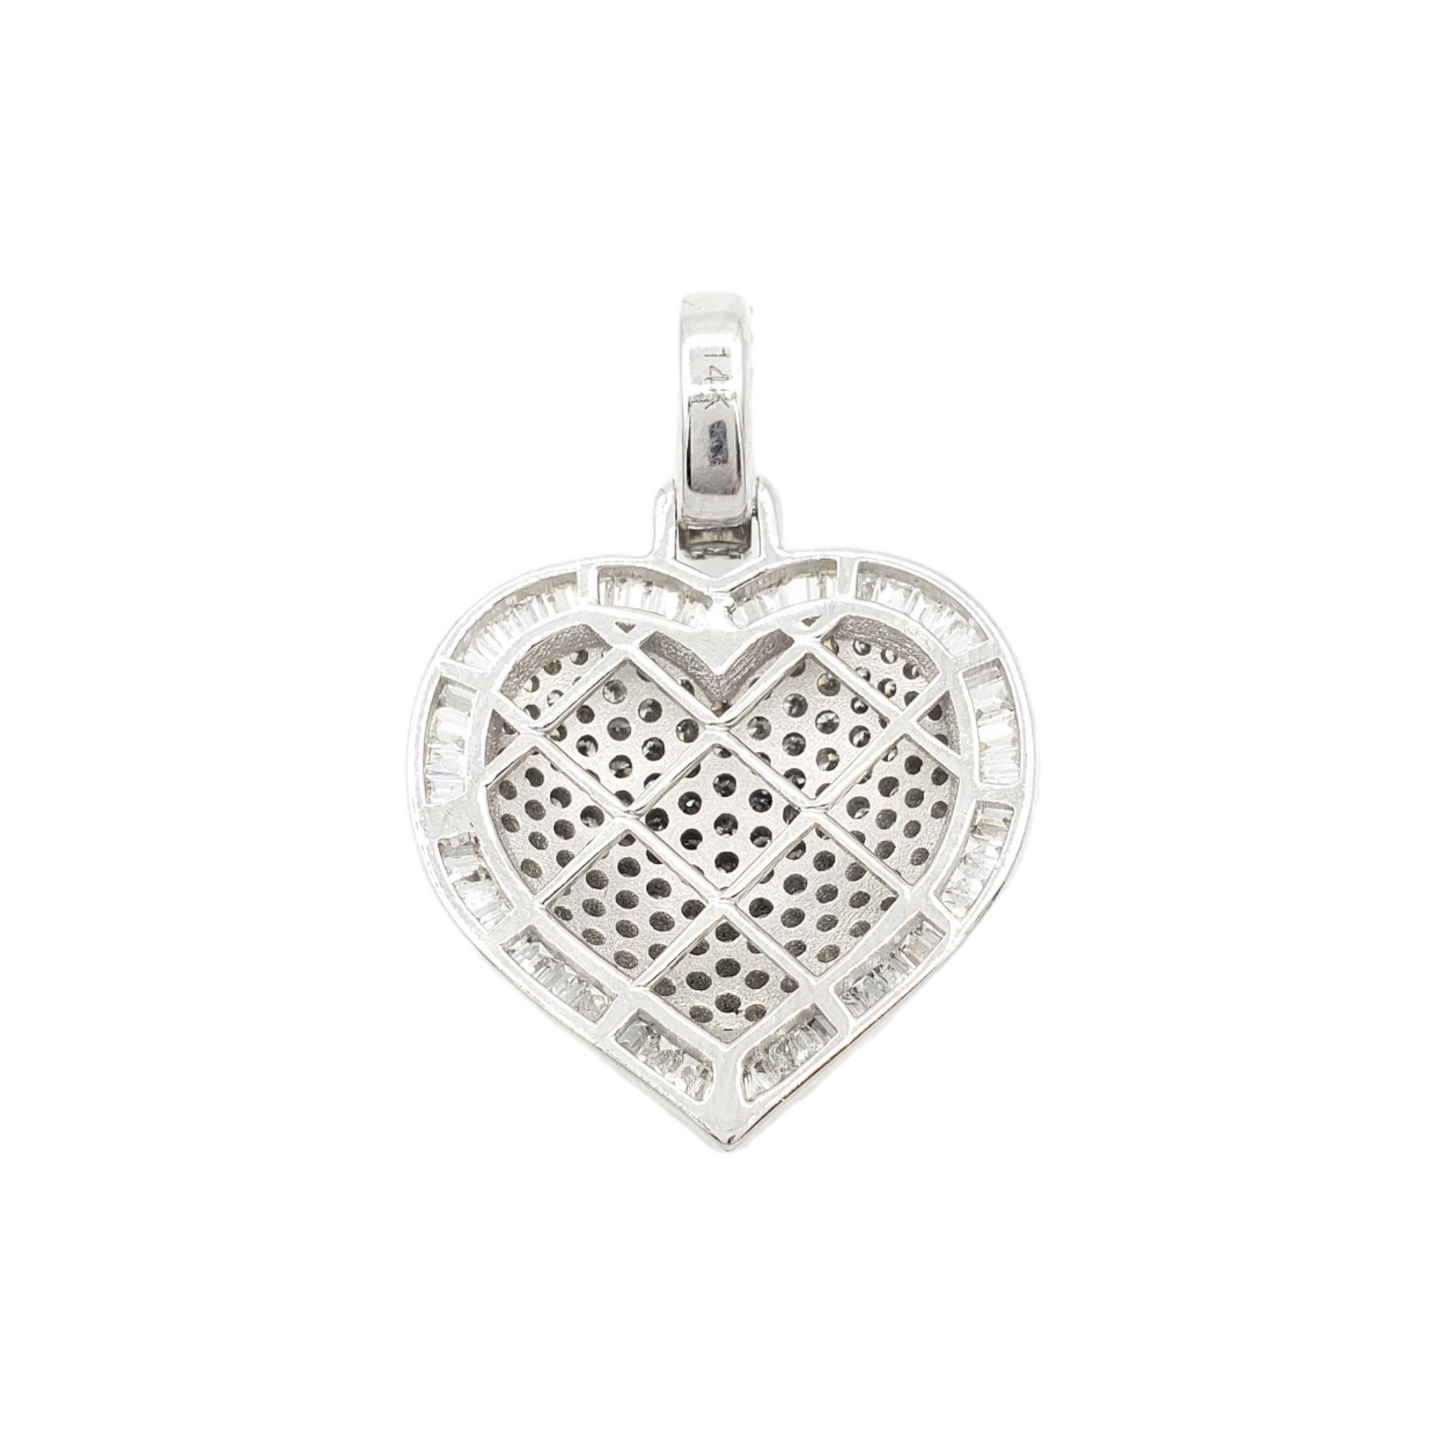 14k Baguette Diamond Heart With 2.87 Carats Of Diamonds #21962